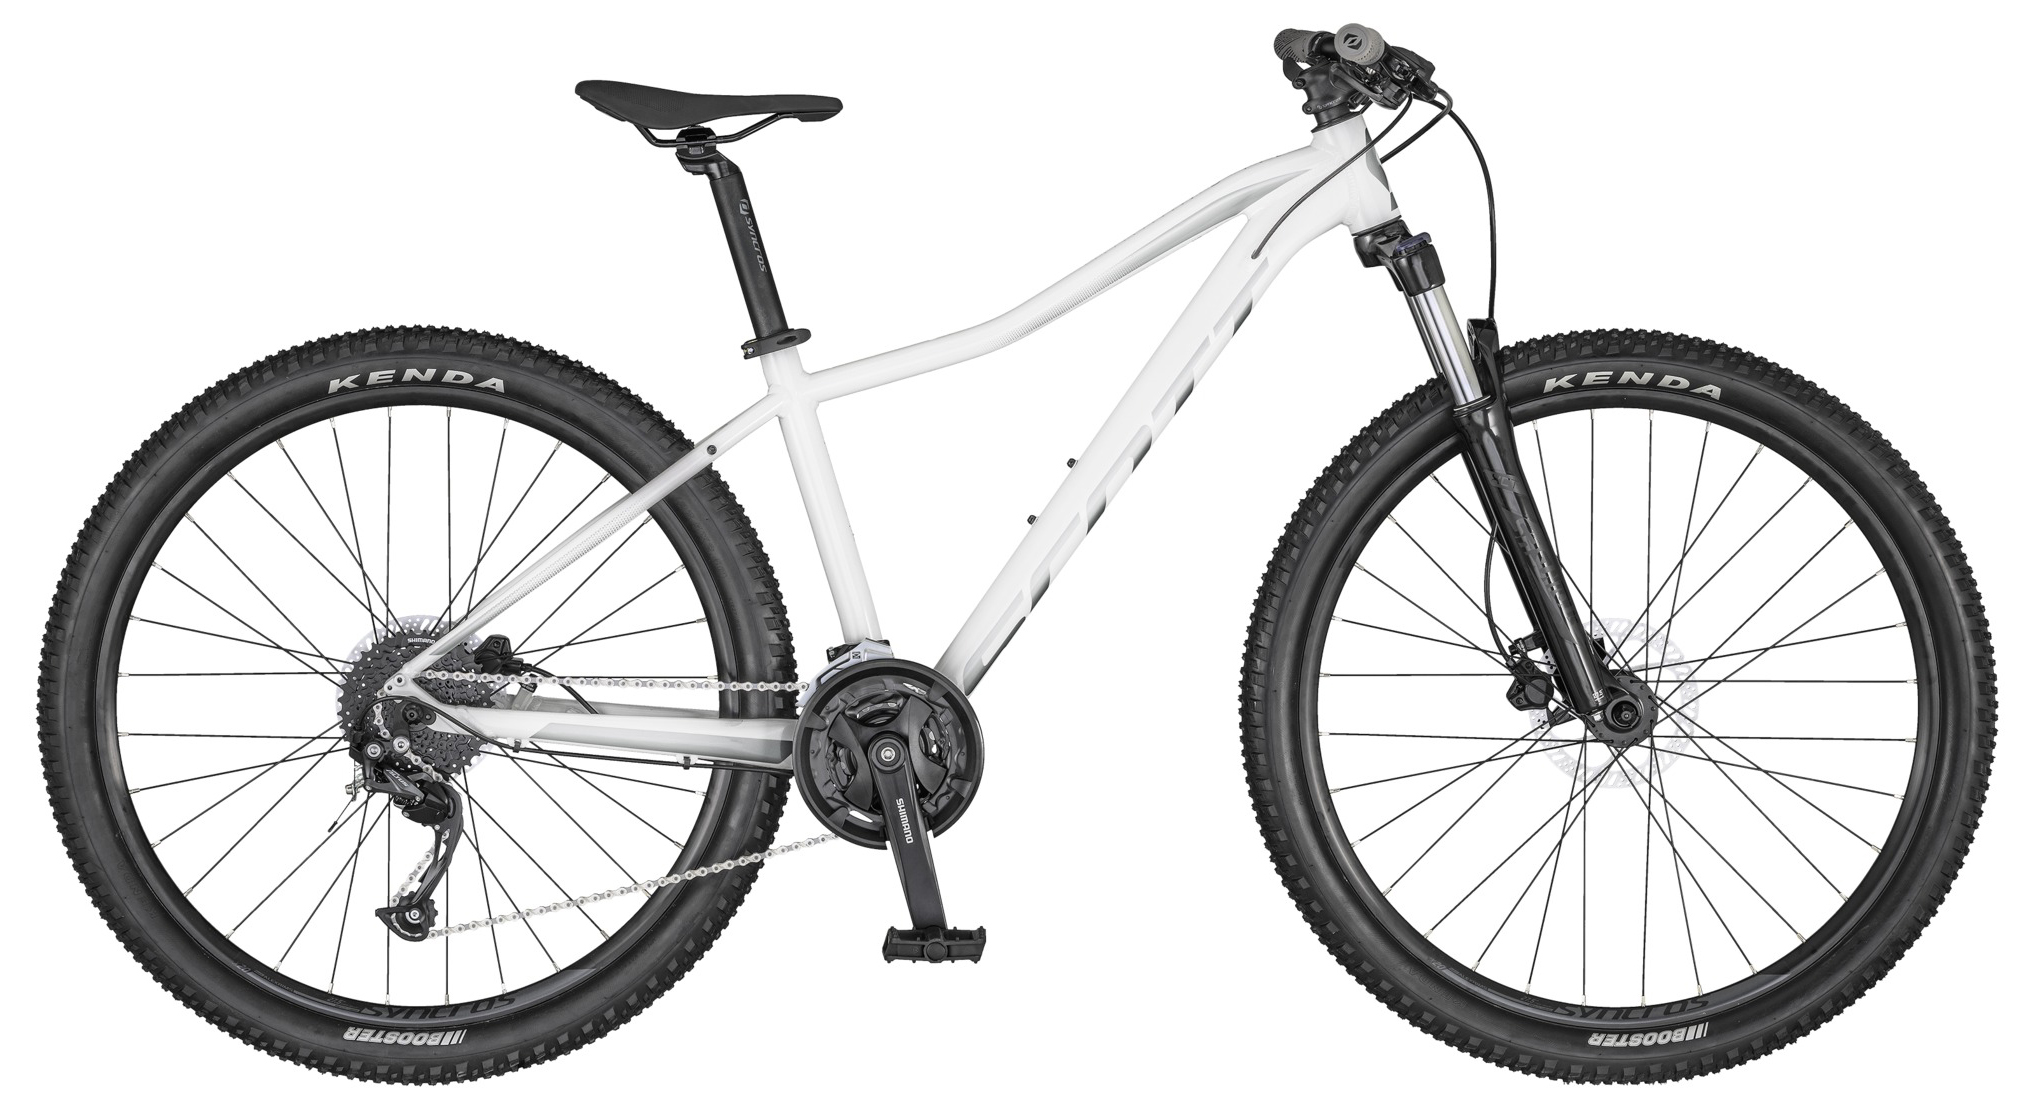  Отзывы о Горном велосипеде Scott Contessa Active 40 27.5 2020